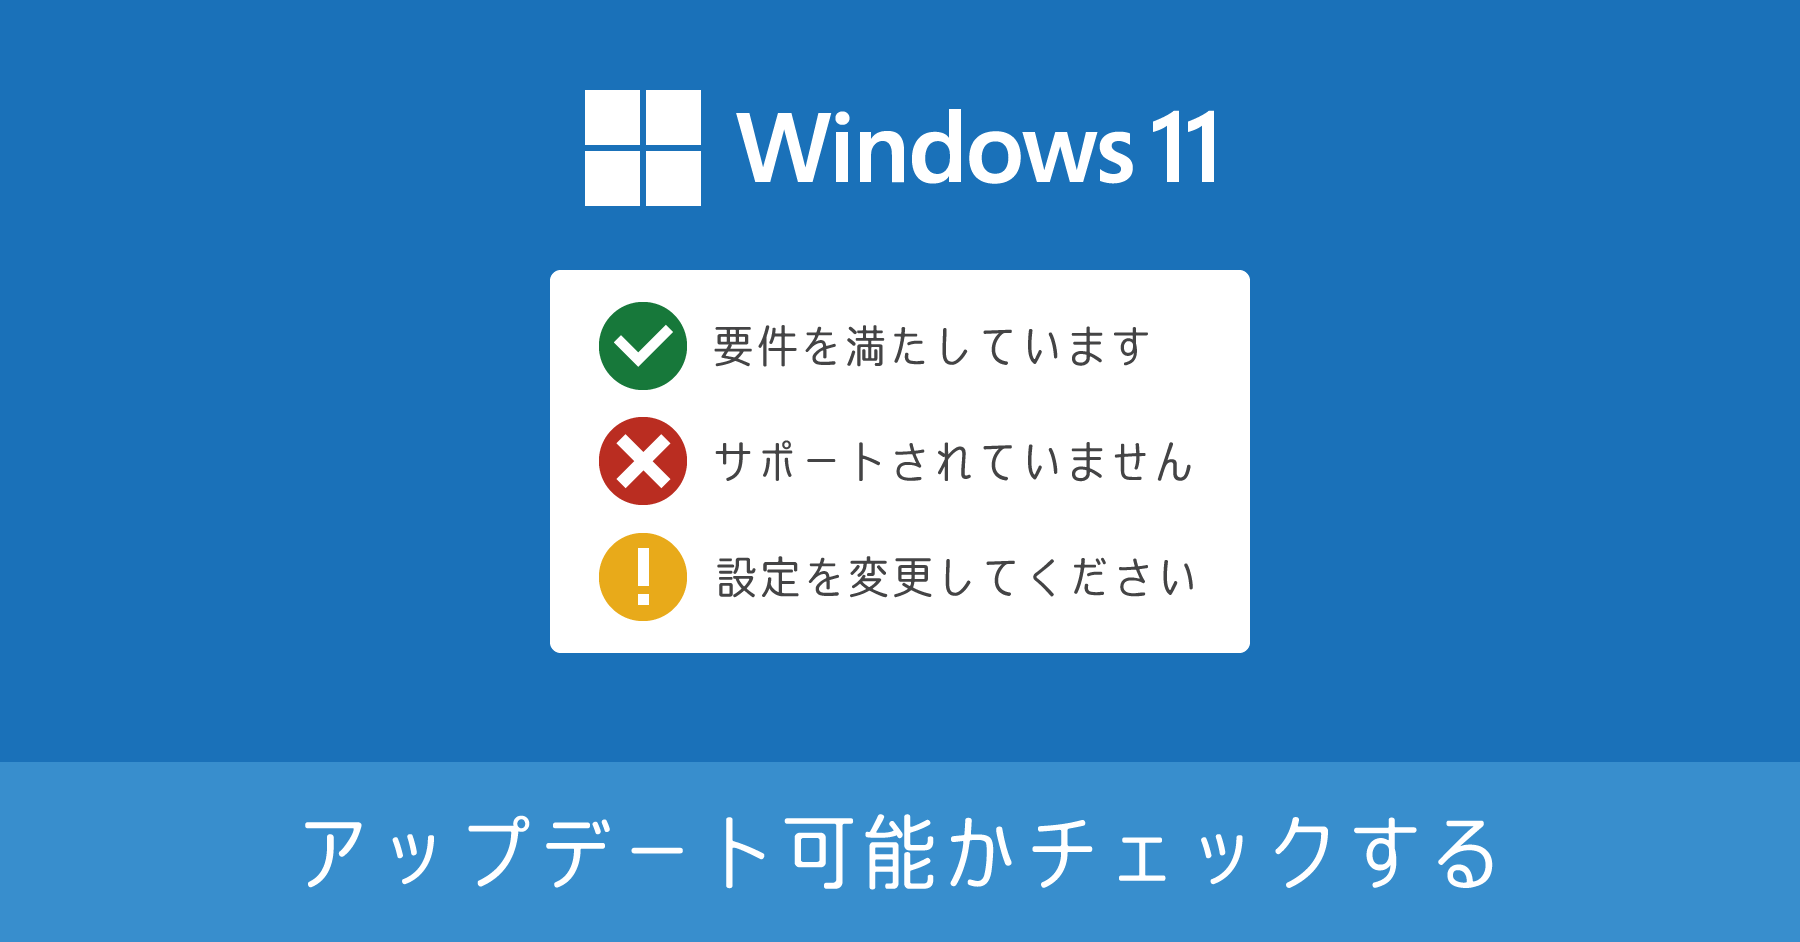 Windows 11 にアップグレード可能か確認する方法